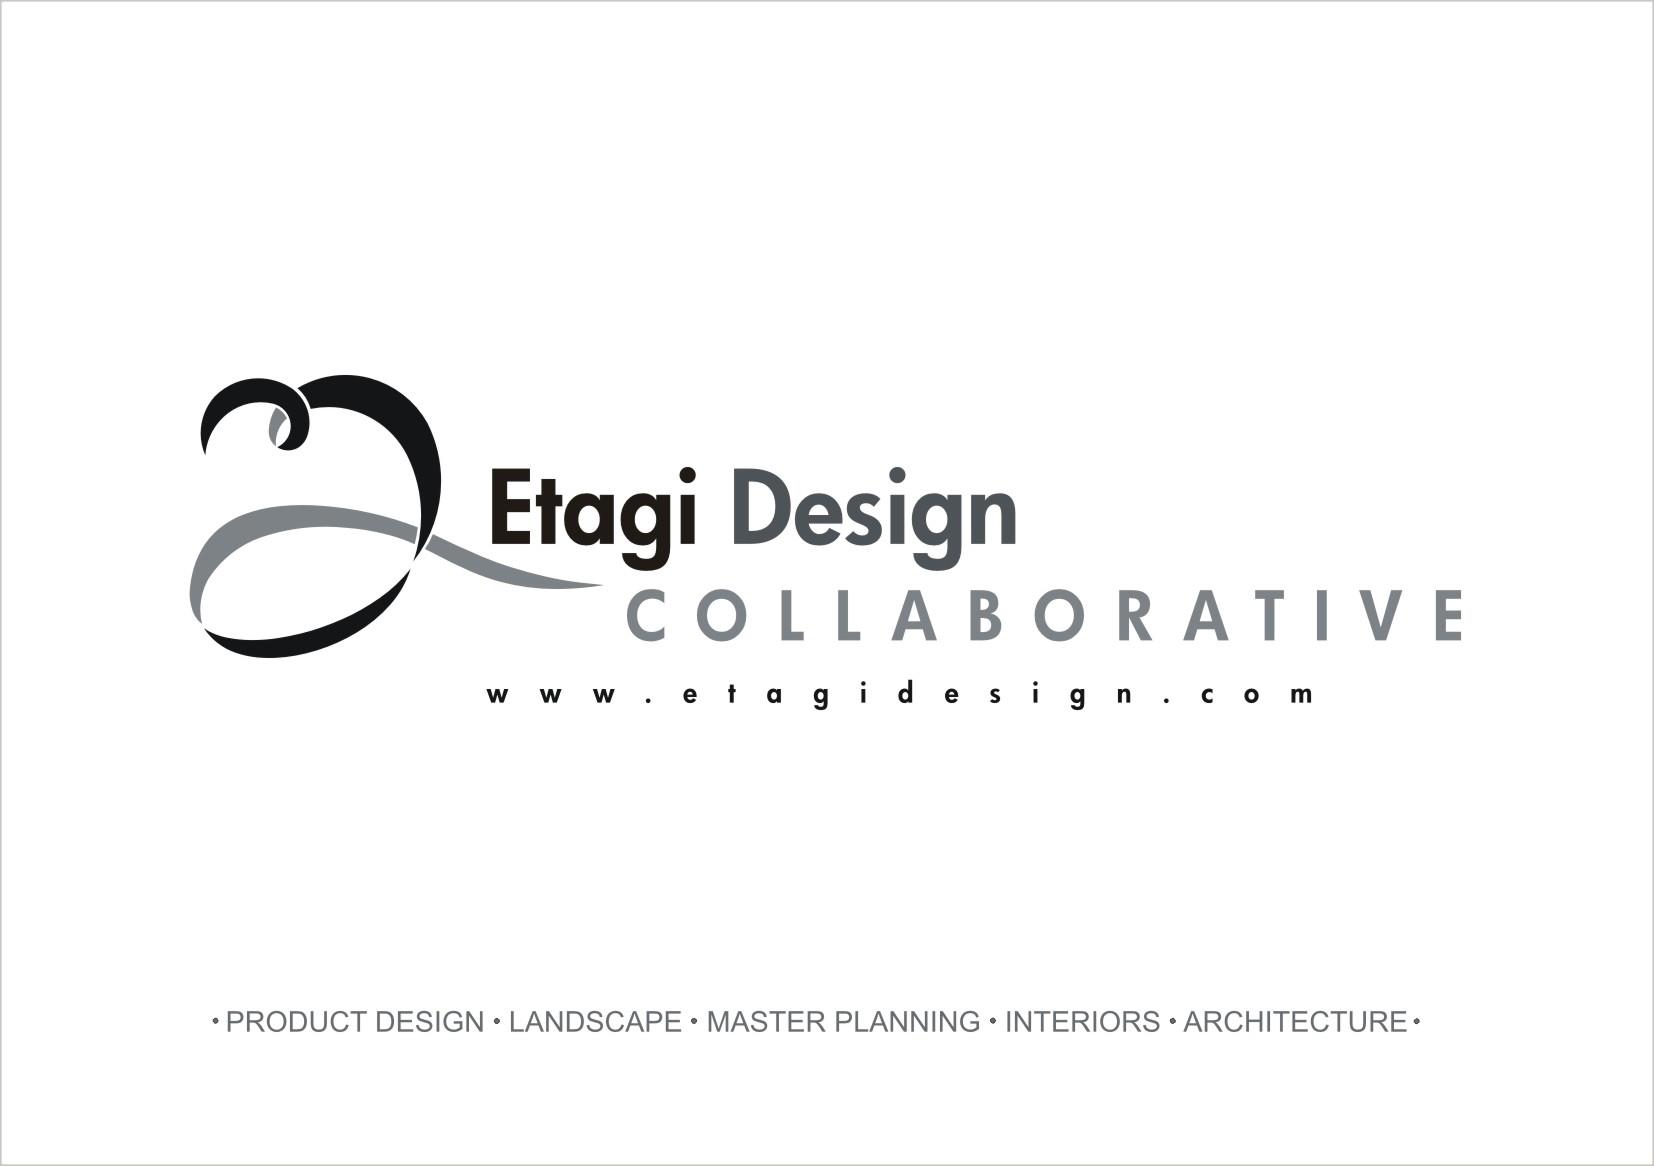 Etagi Design Collaborative|Architect|Professional Services